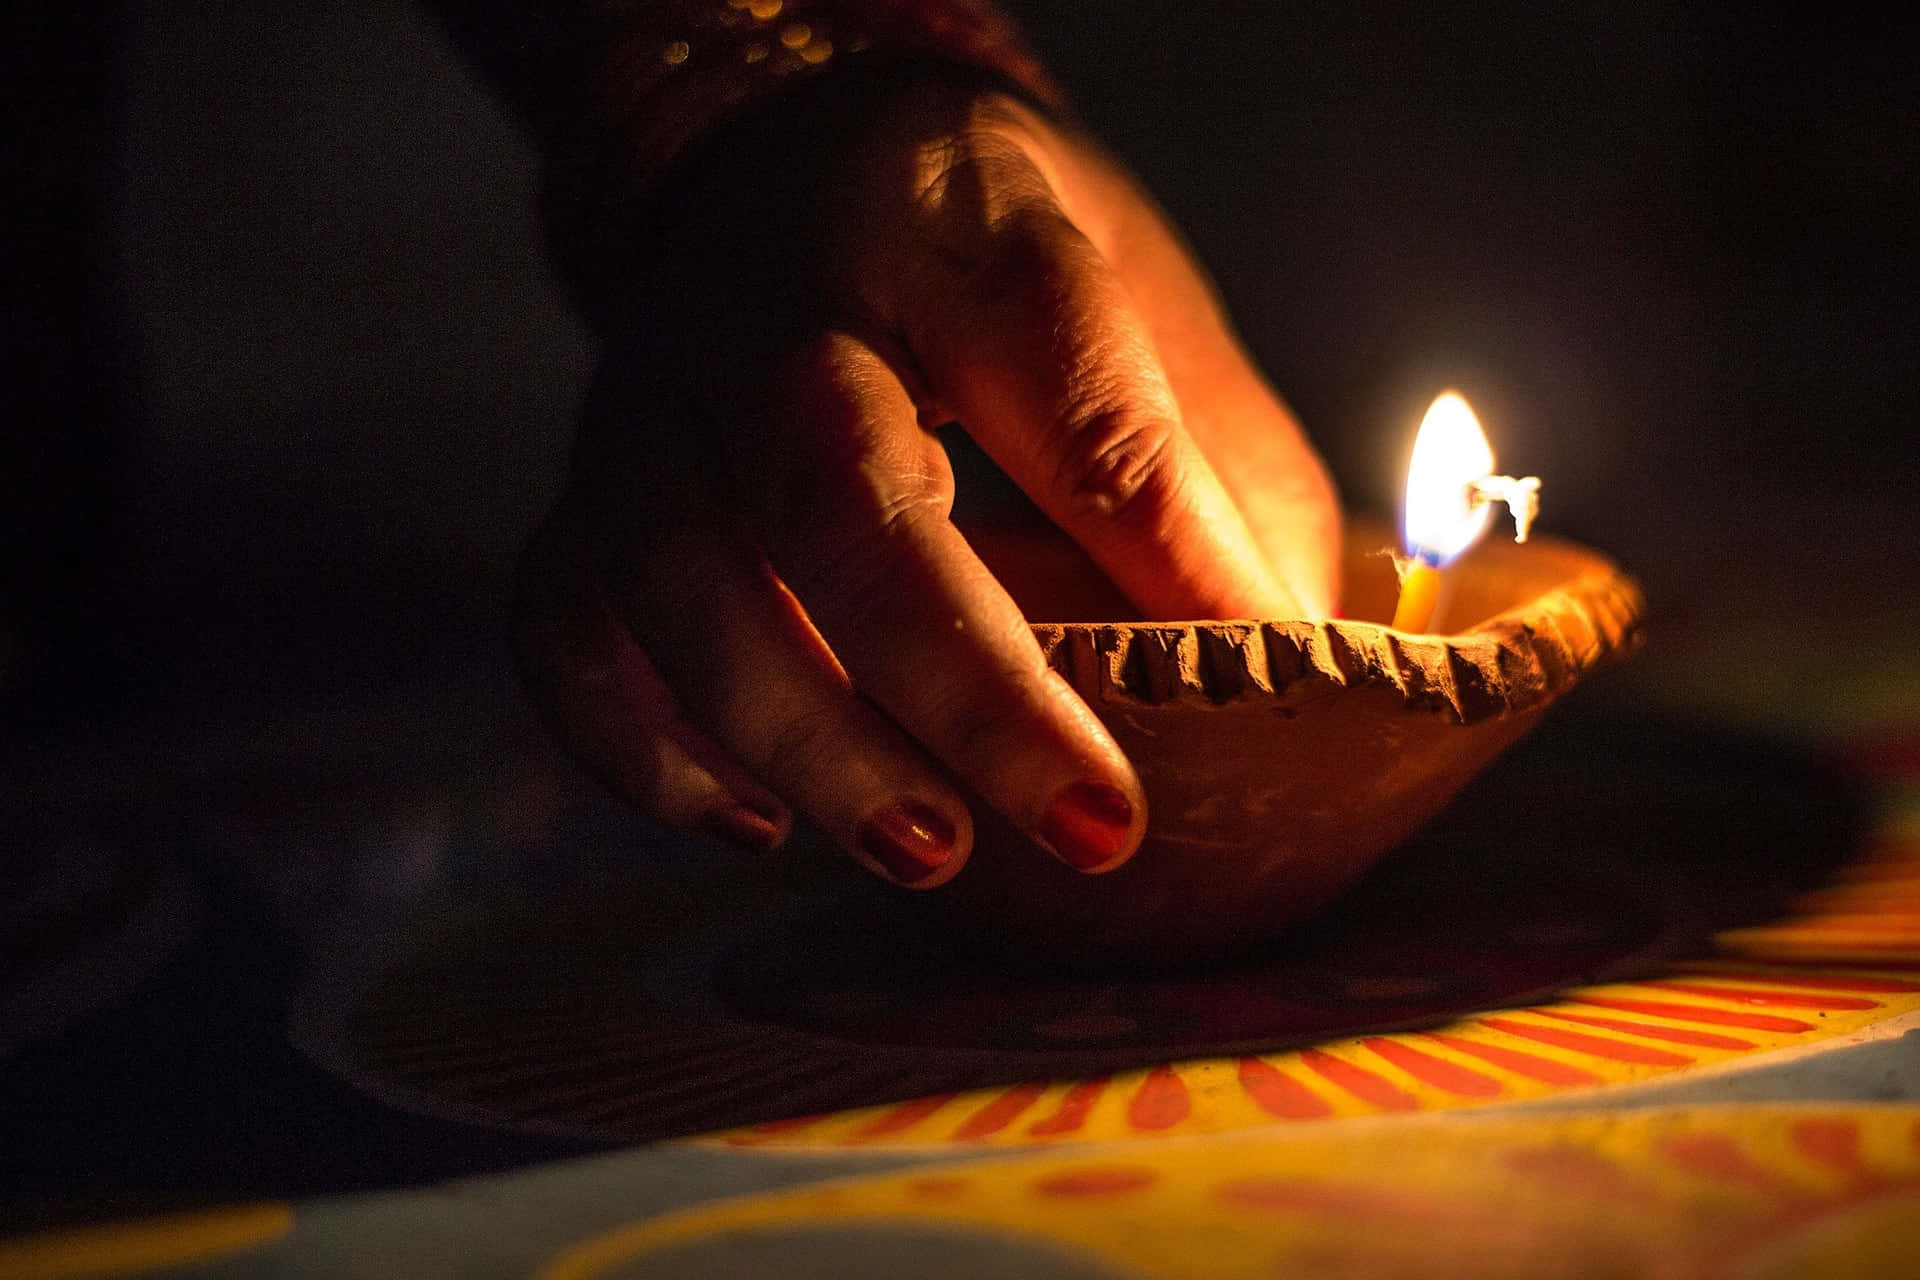 "Celebrate Diwali: The Festival of Lights"